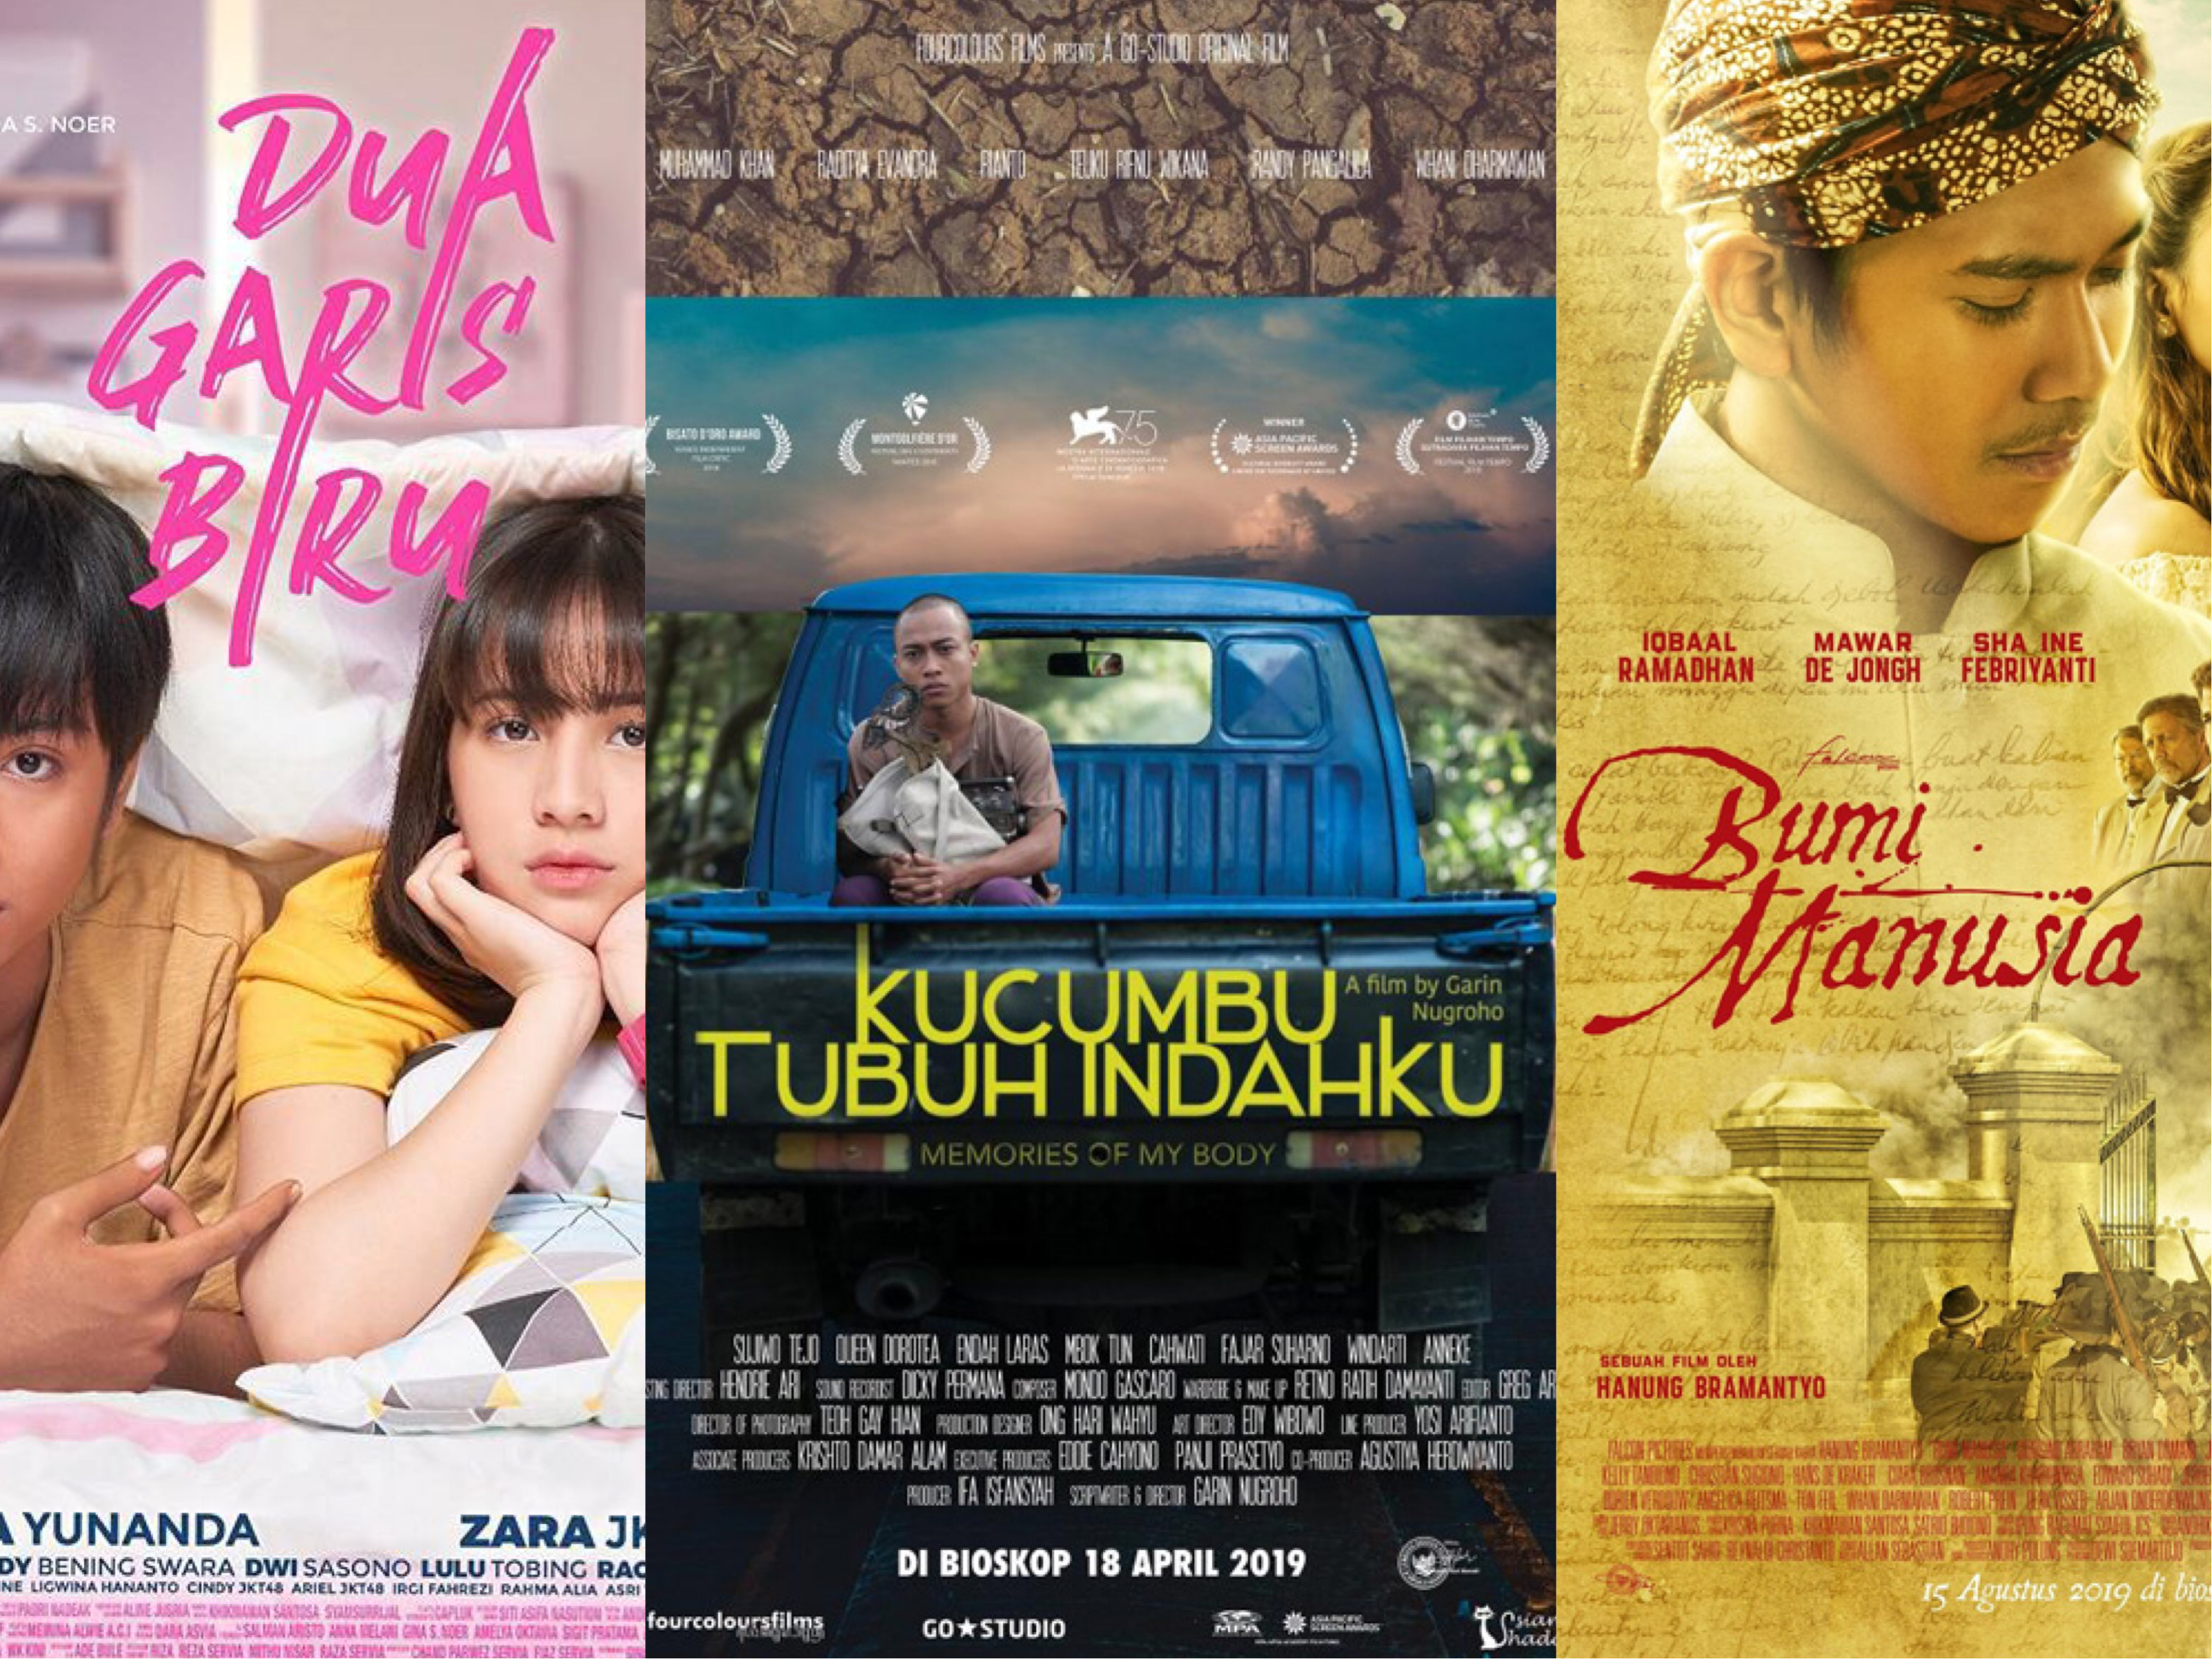 Nominasi Festival Film Indonesia 2019, Dari 'Kucumbu' hingga 'Garis Biru'